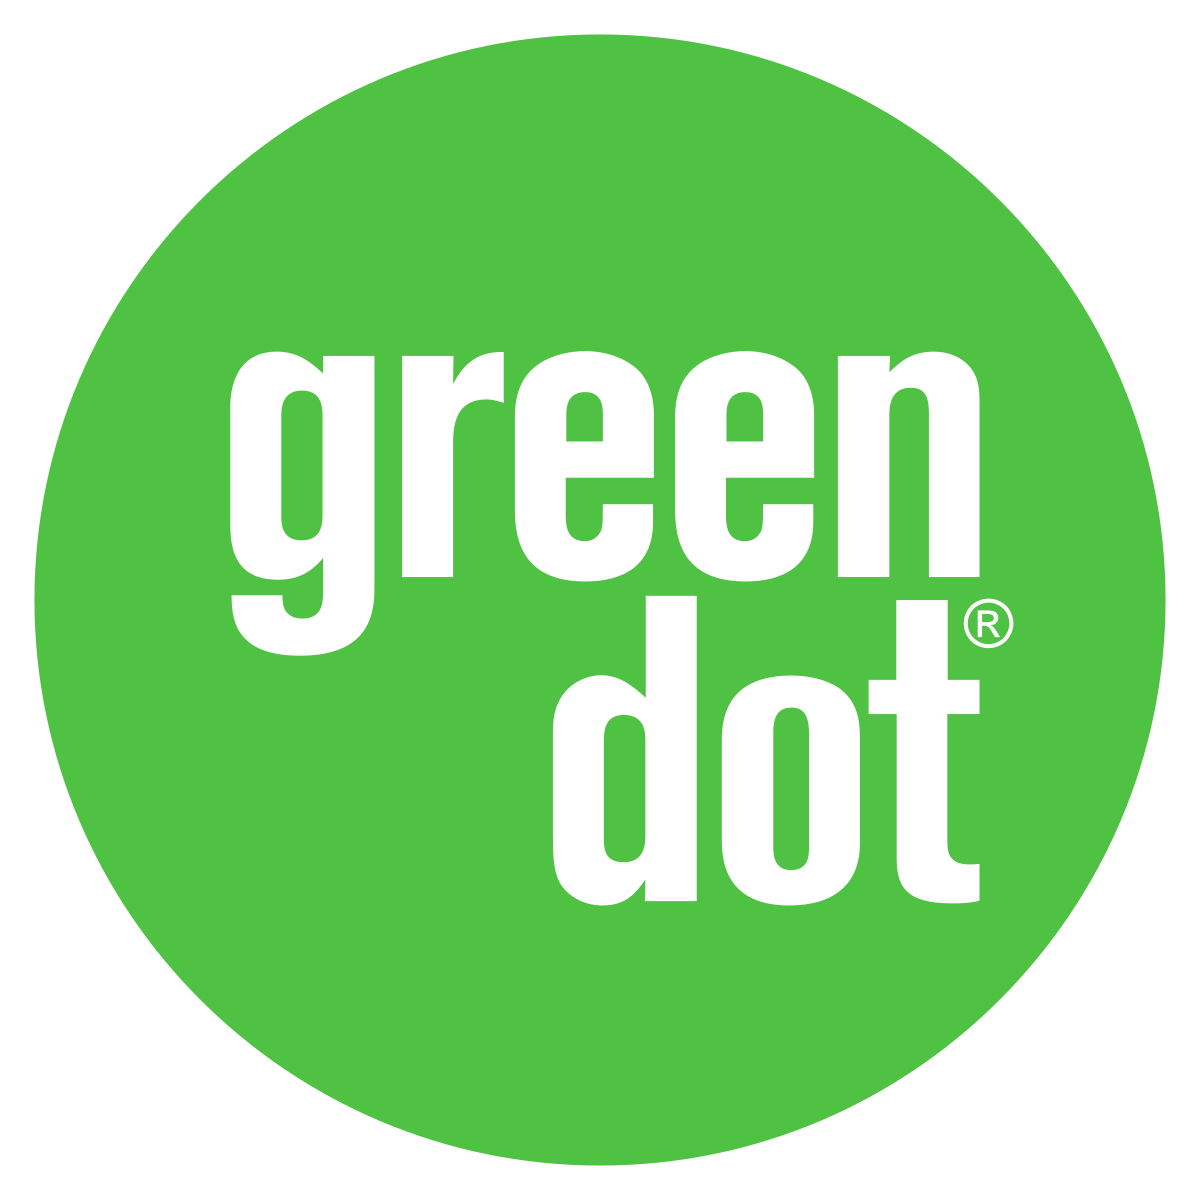 With Green Circle Brand Logo - Green Dot Corporation